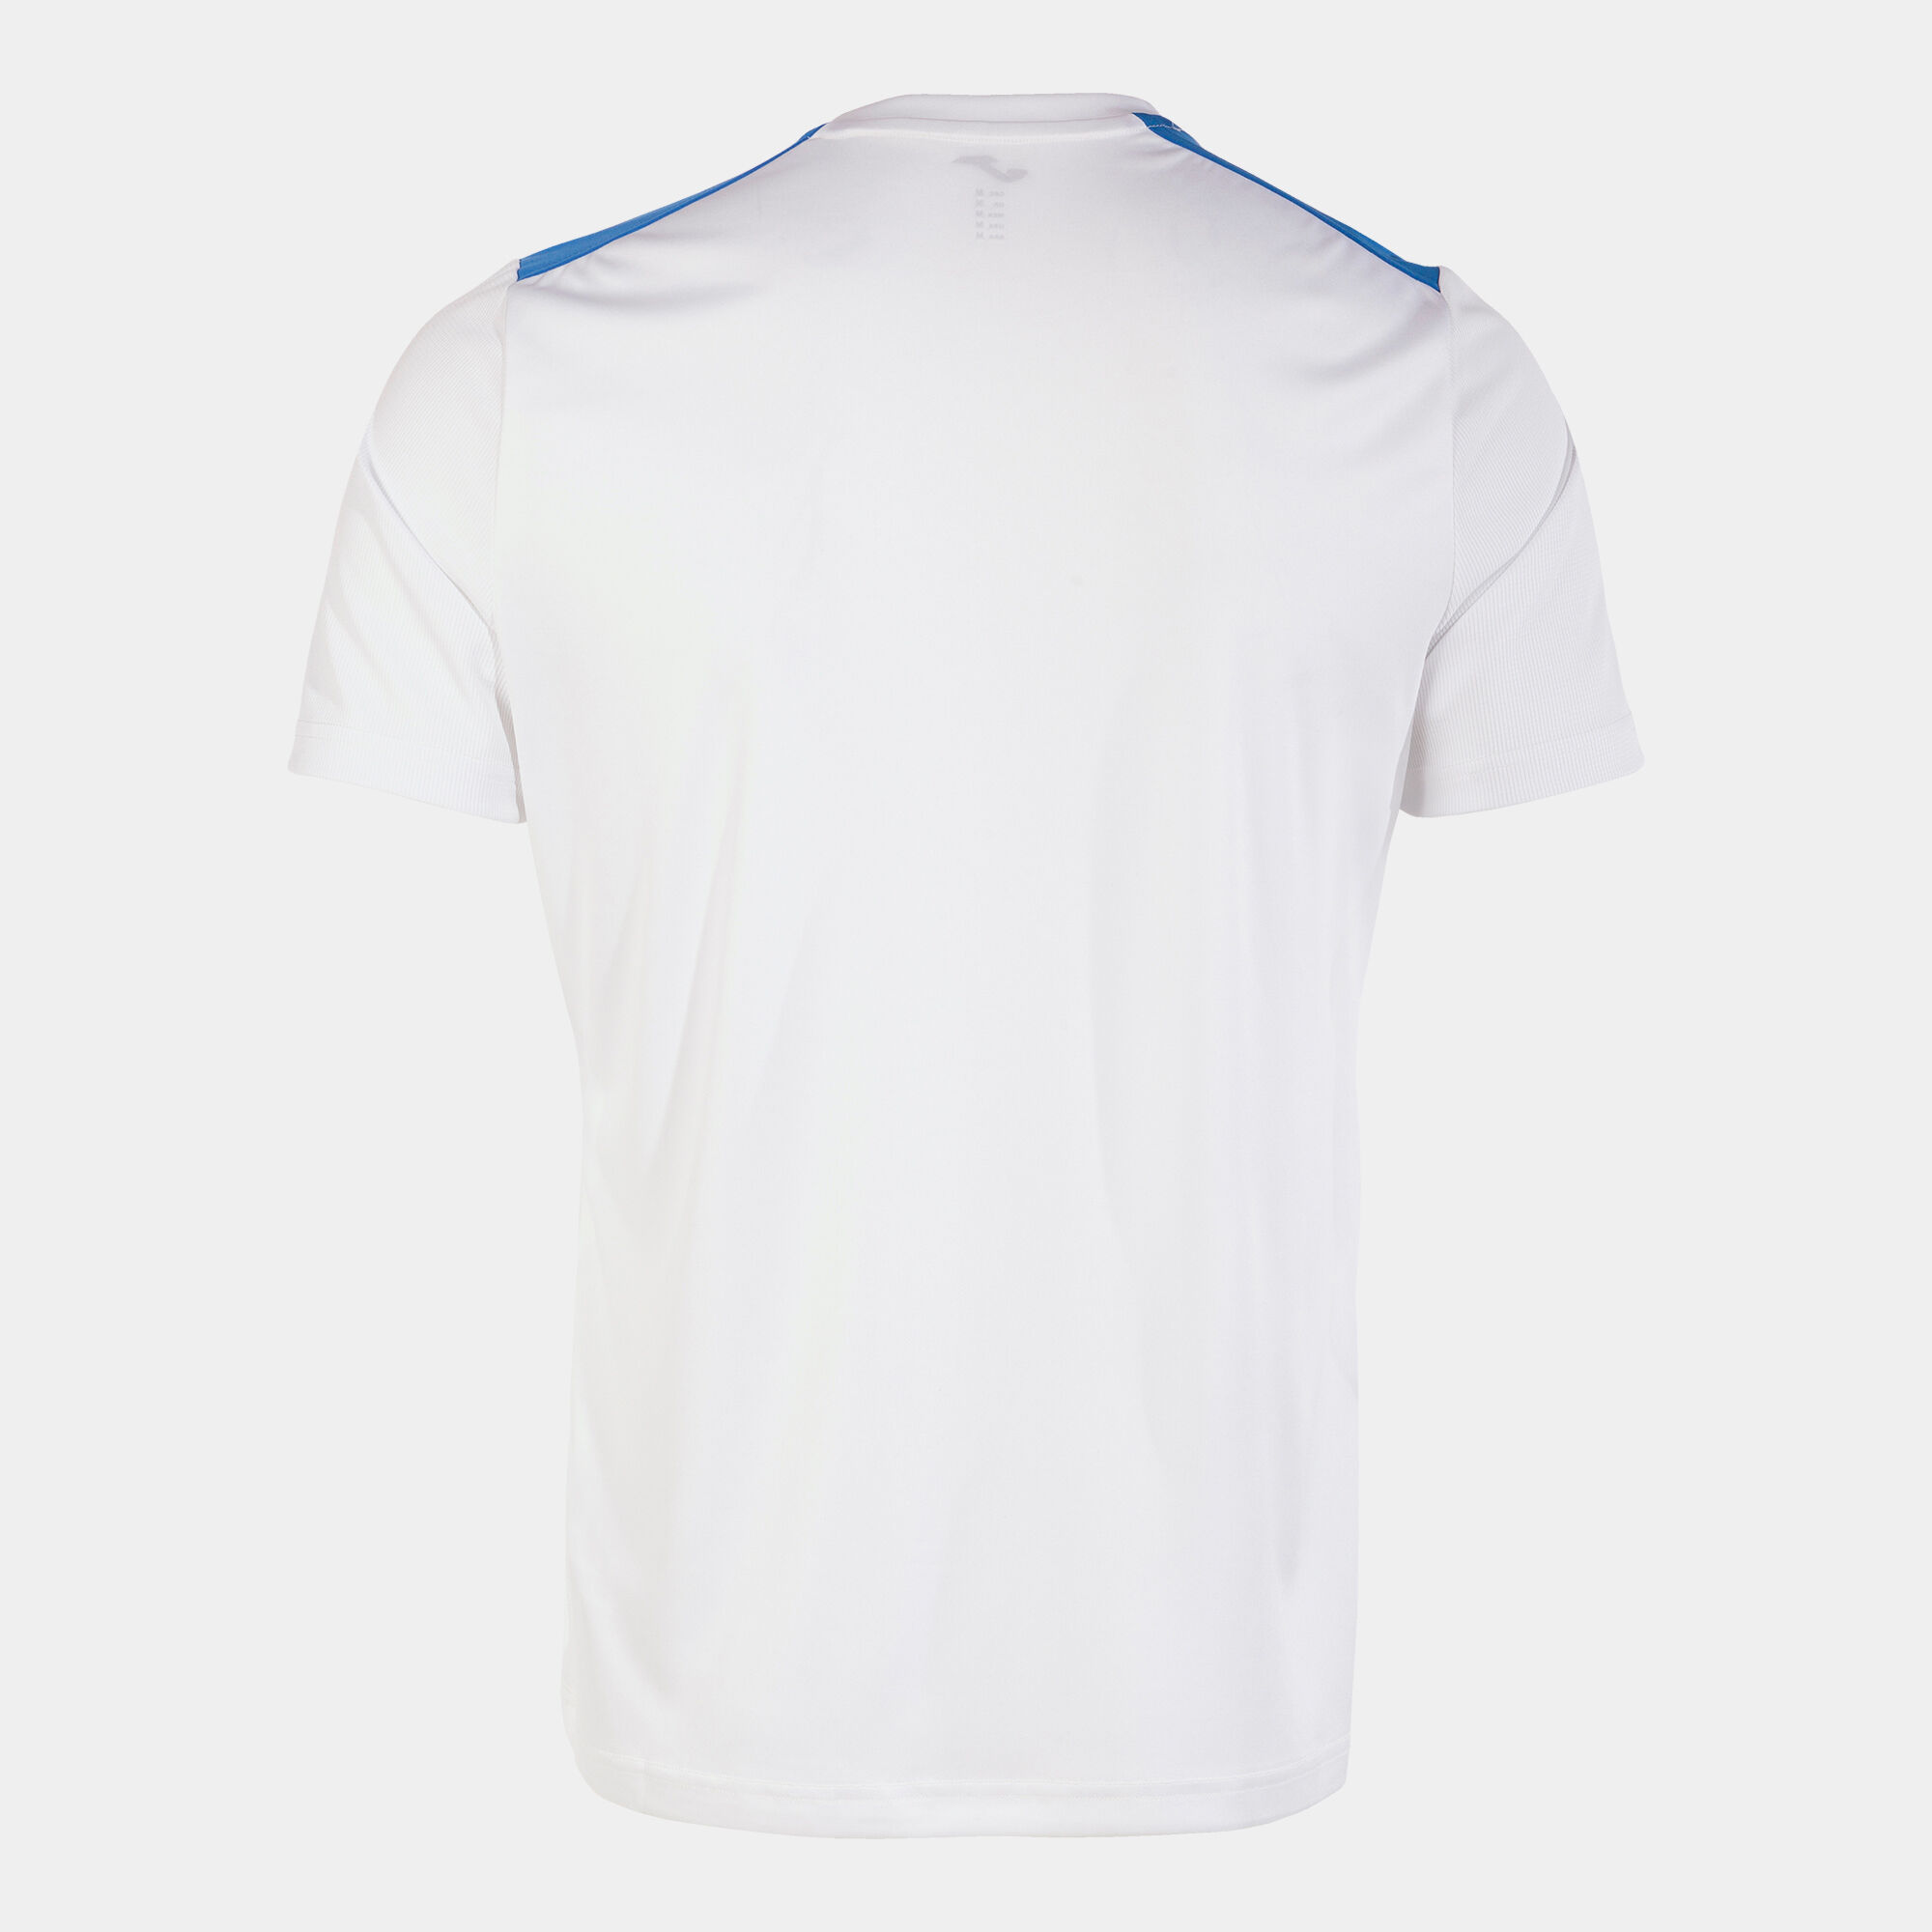 T-shirt manga curta homem Championship VII branco azul royal